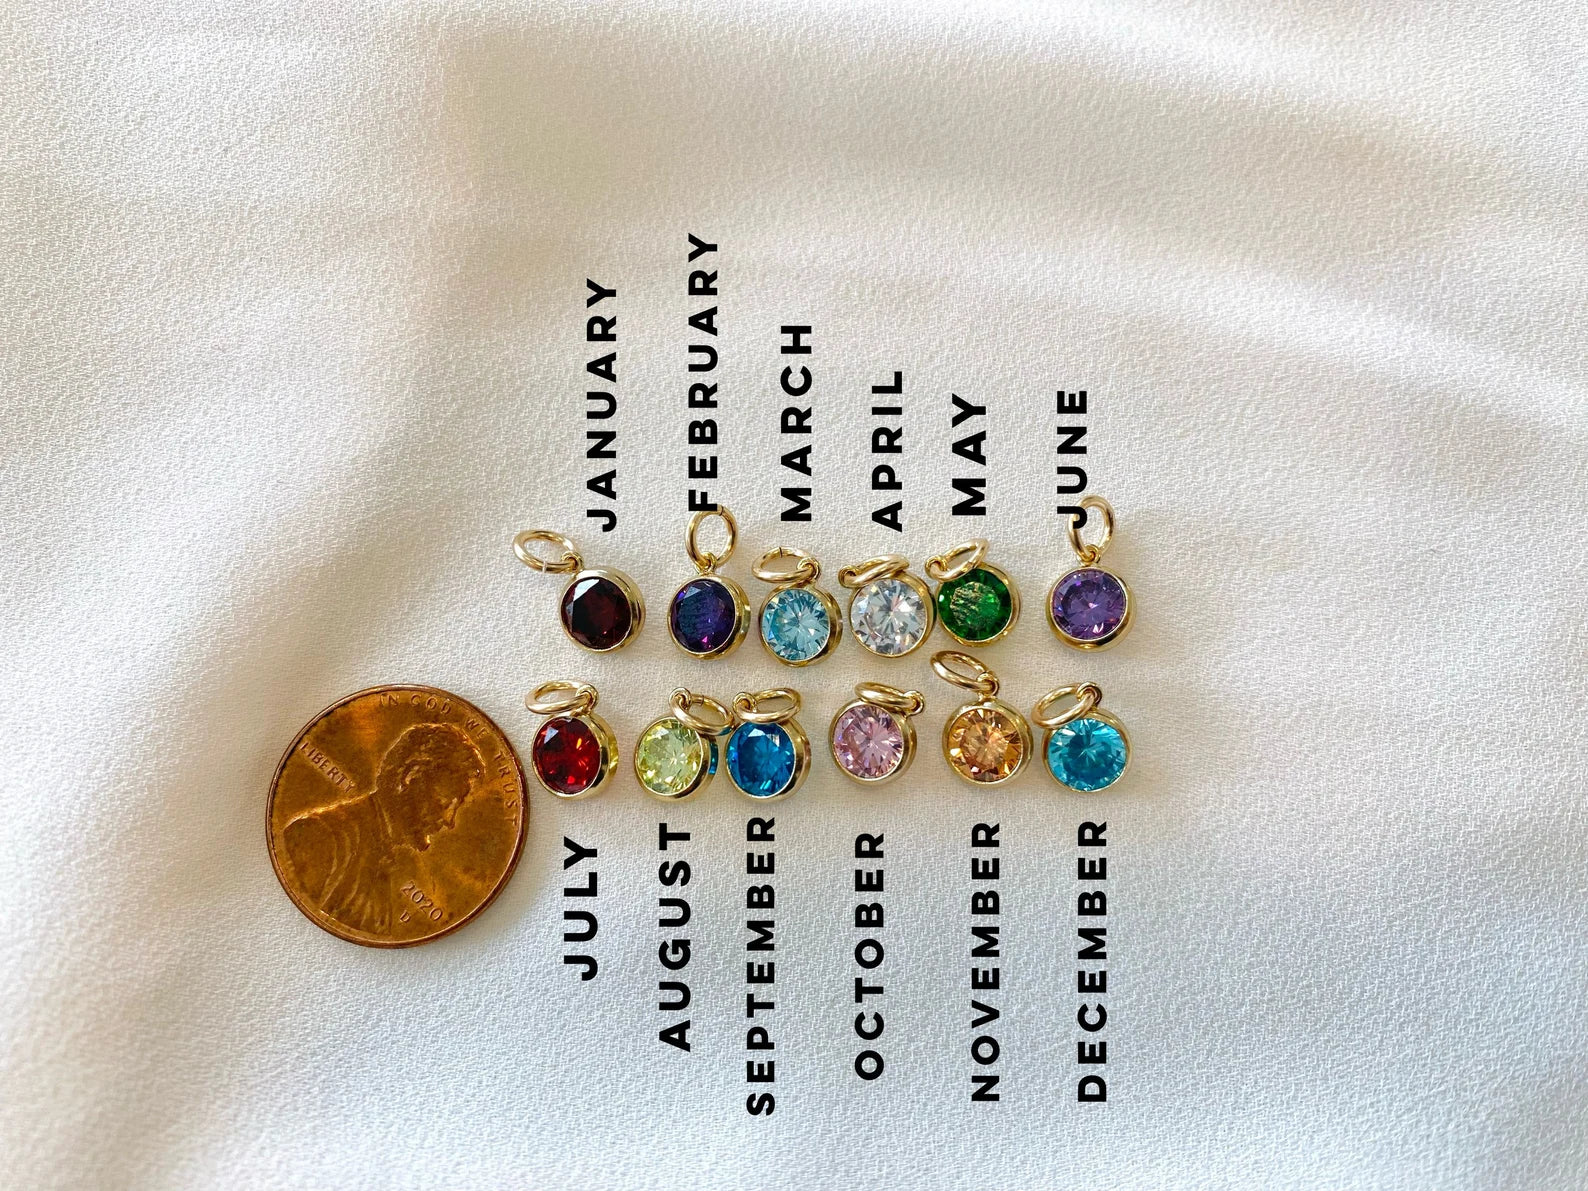 Birthstone Charm Necklace - Gold Filled - Dainty Coin Pendant - Garnet Amethyst Aquamarine Crystal Emerald Alexandrite Ruby Peridot Sapphire Rose Quartz Citrine Blue Topaz